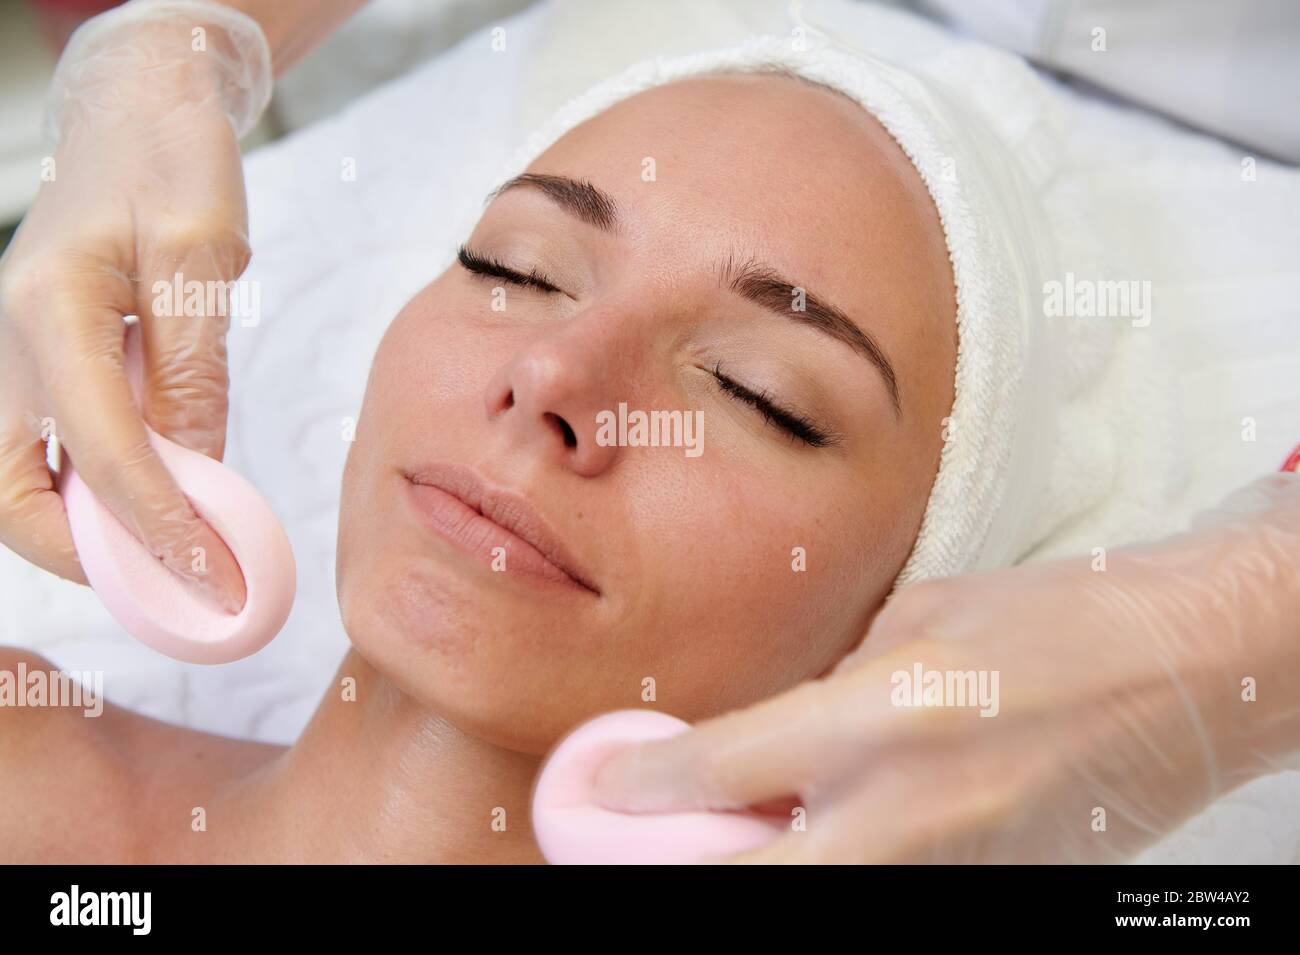 Female getting facial massage alternative medicine top view Stock Photo